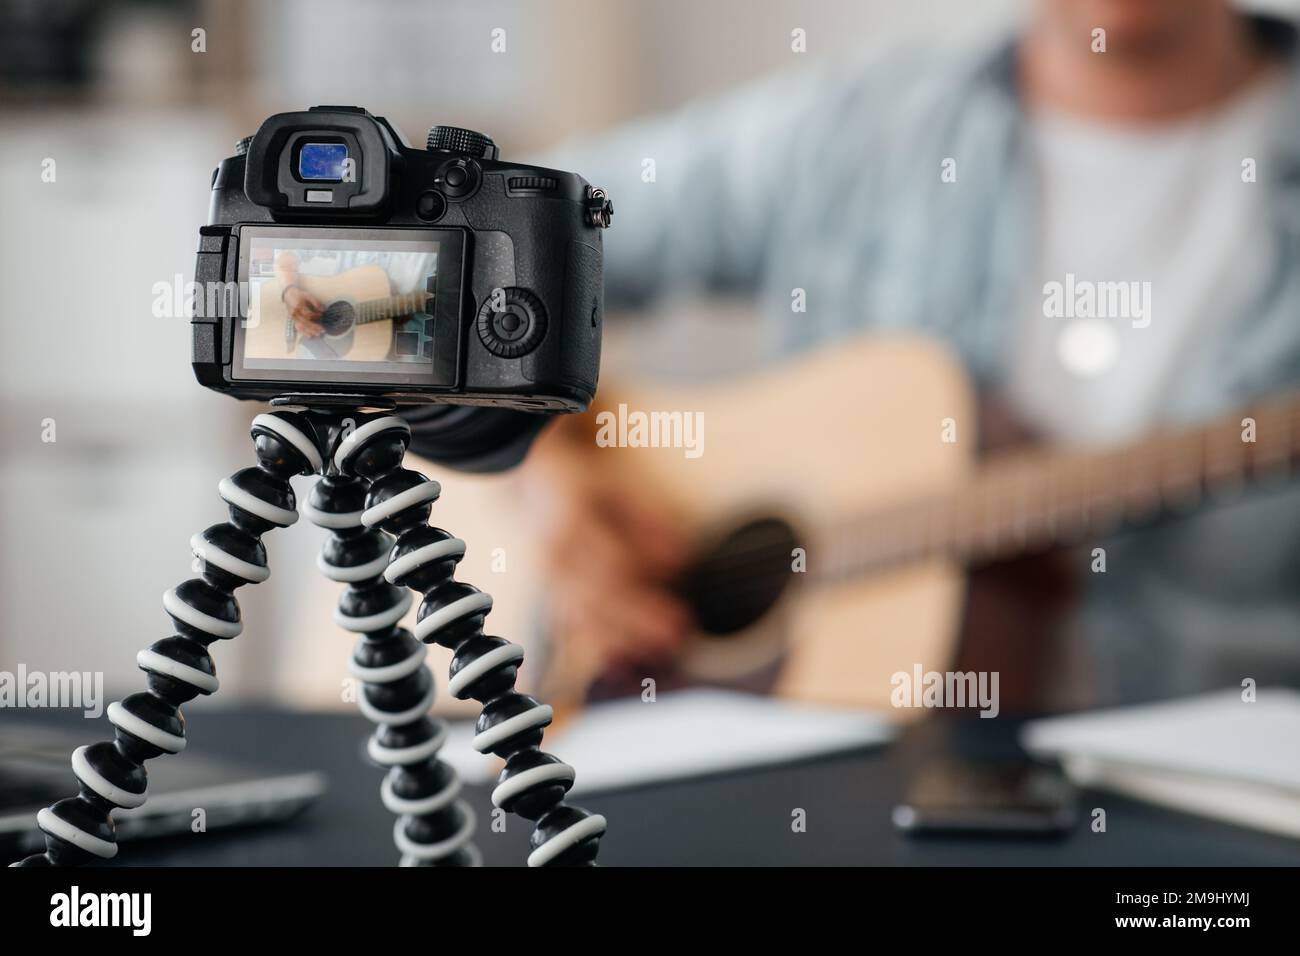 camera recording video of man playing guitar Stock Photo